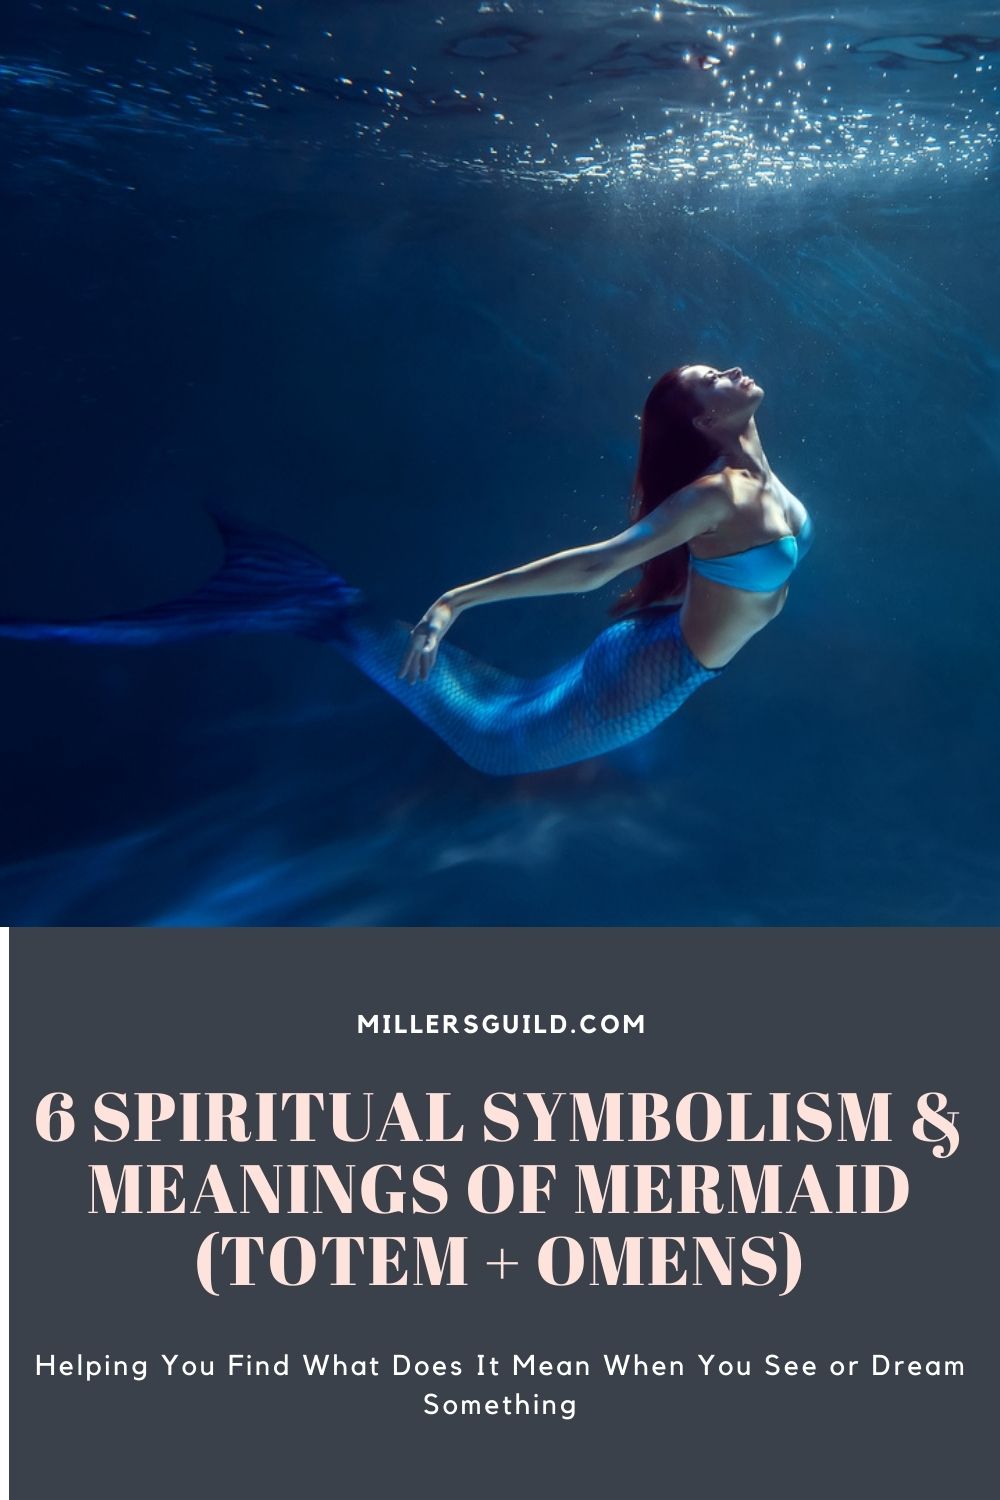 6 Spiritual Symbolism & Meanings of Mermaid (Totem + Omens) 2